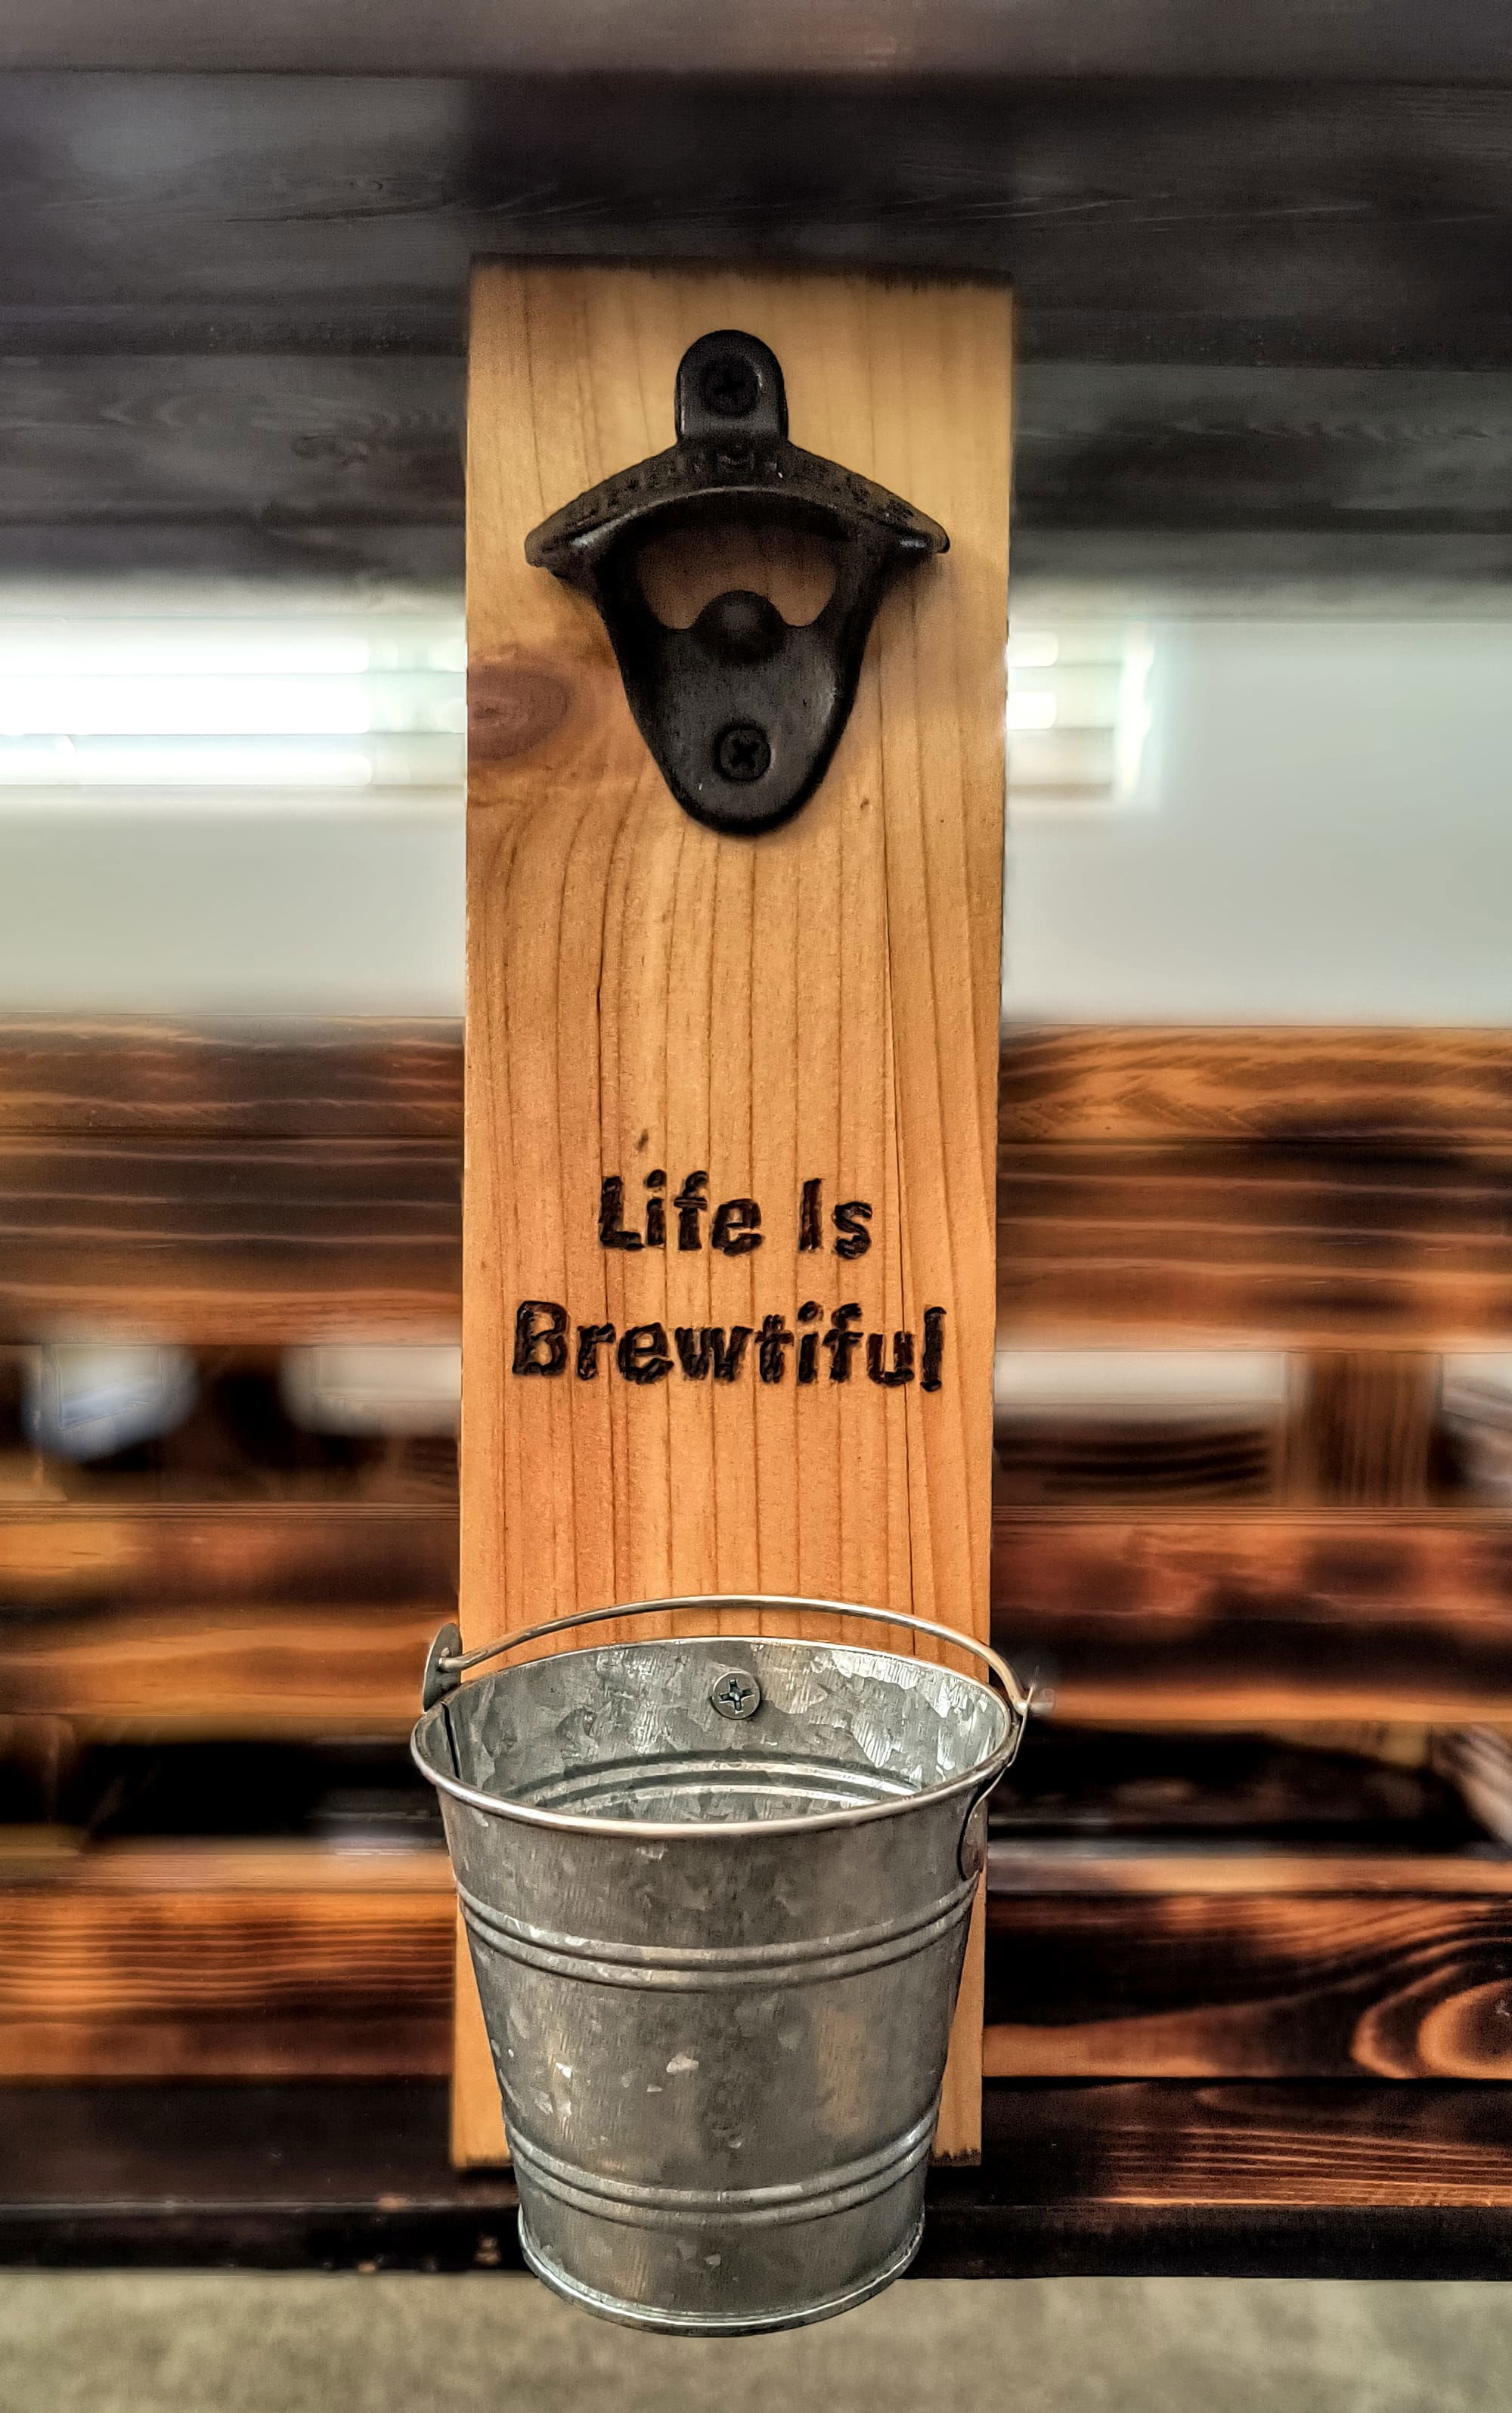 Life's Brewtiful ($25)